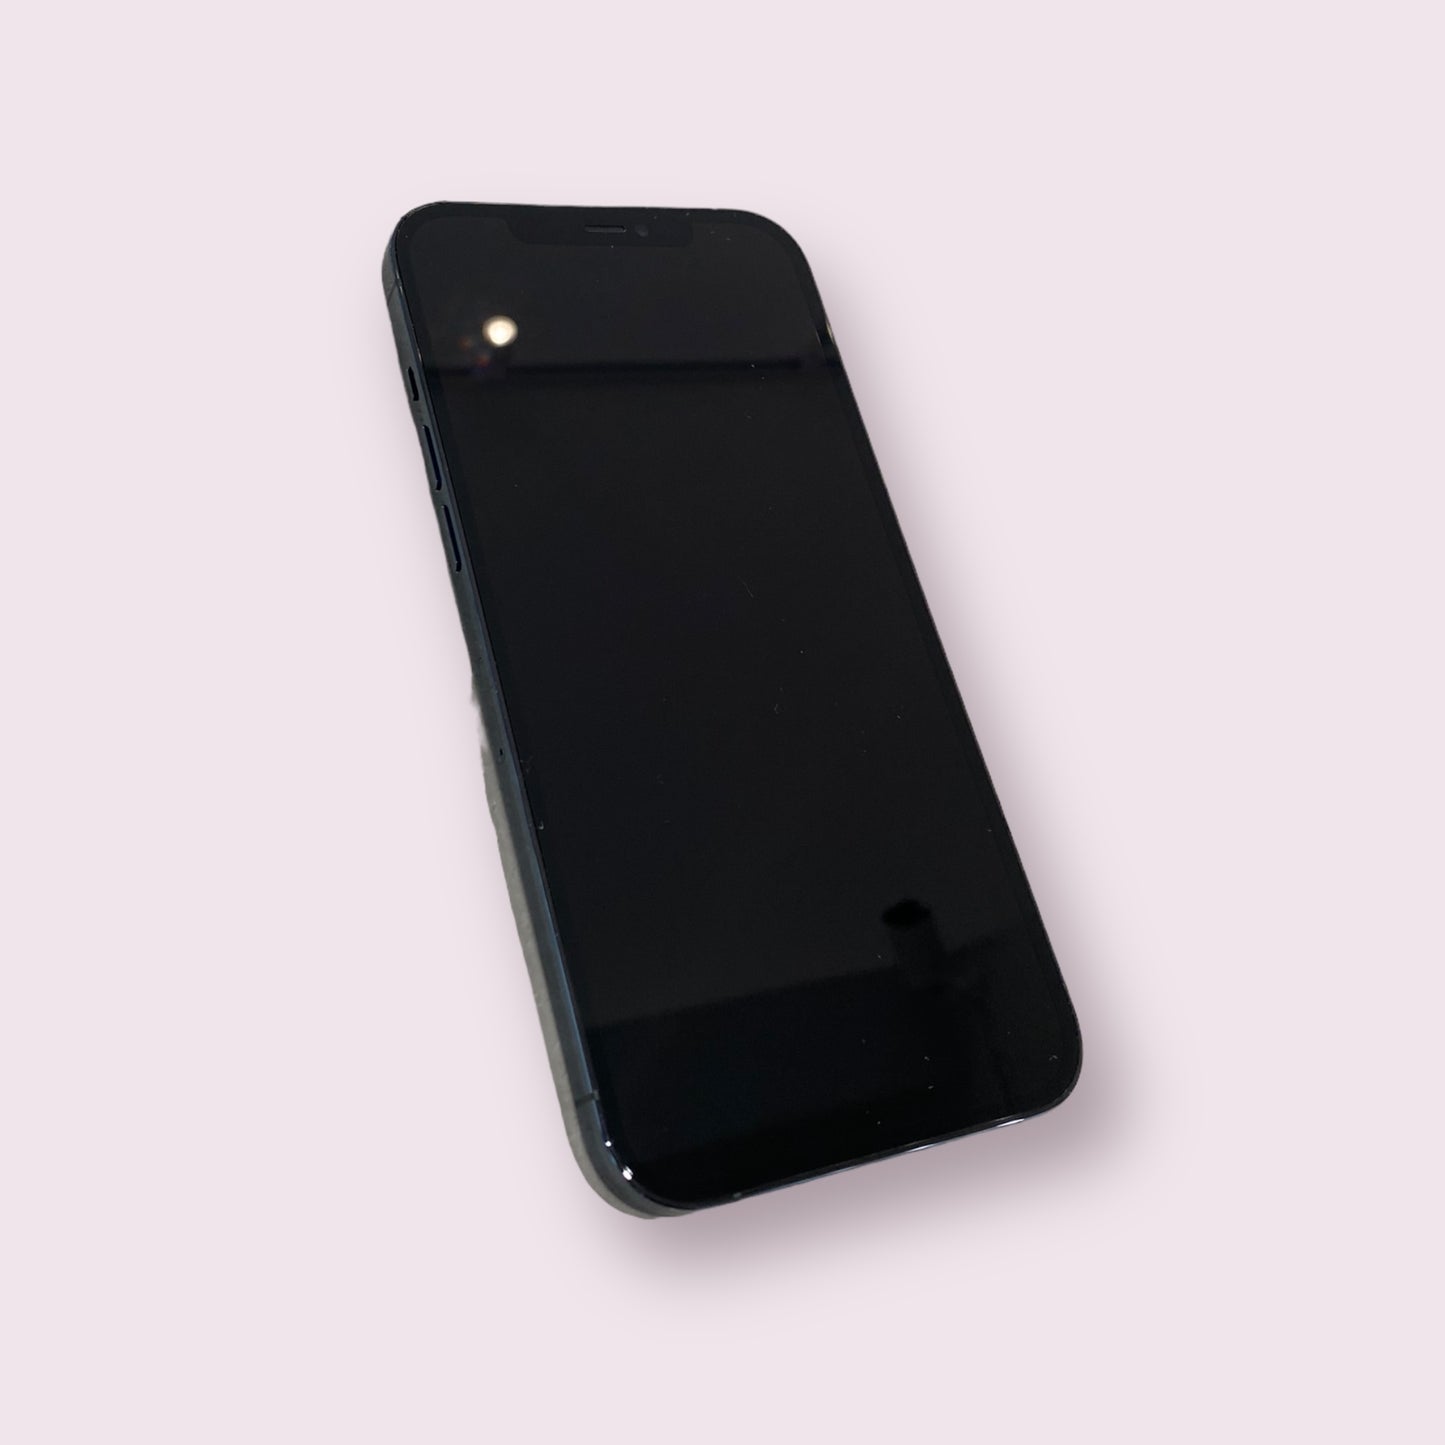 Apple iPhone 12 Pro Max 128GB Graphite Grey - Unlocked - Grade A+